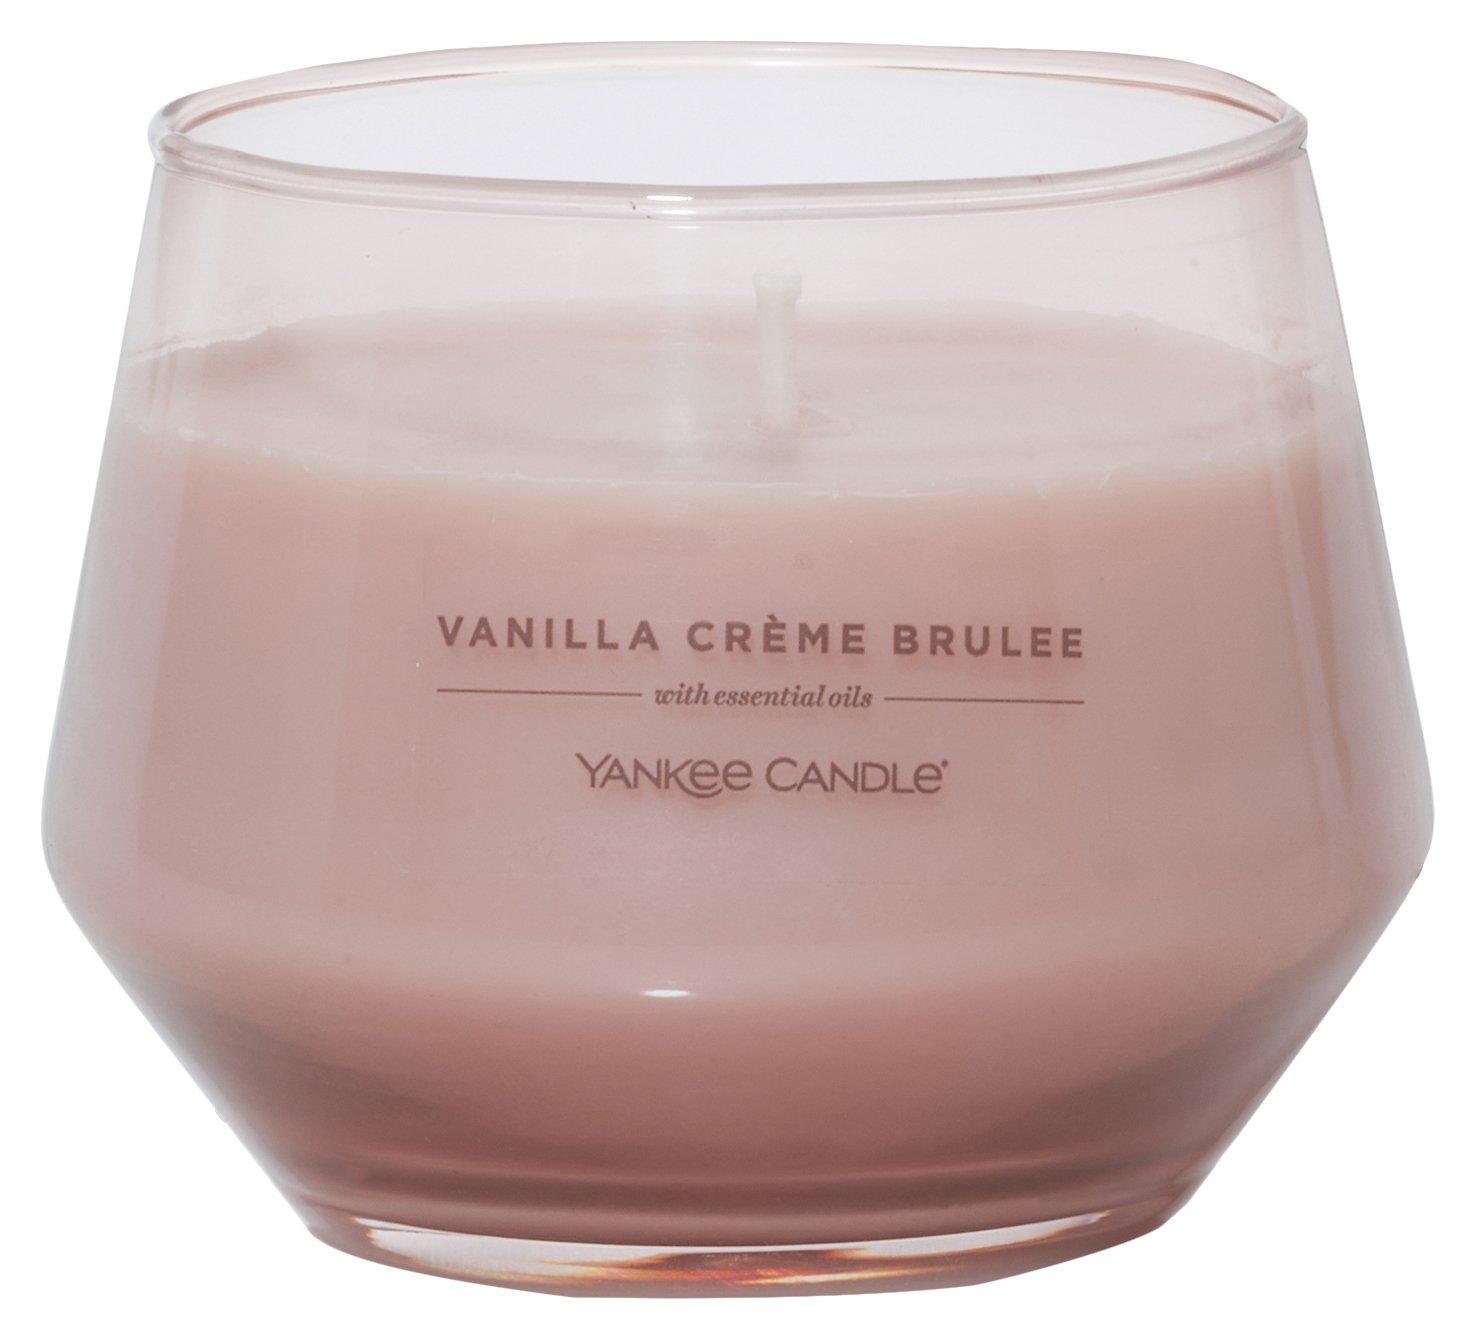 Yankee Candle 10oz Vanilla Creme Brulee Candle